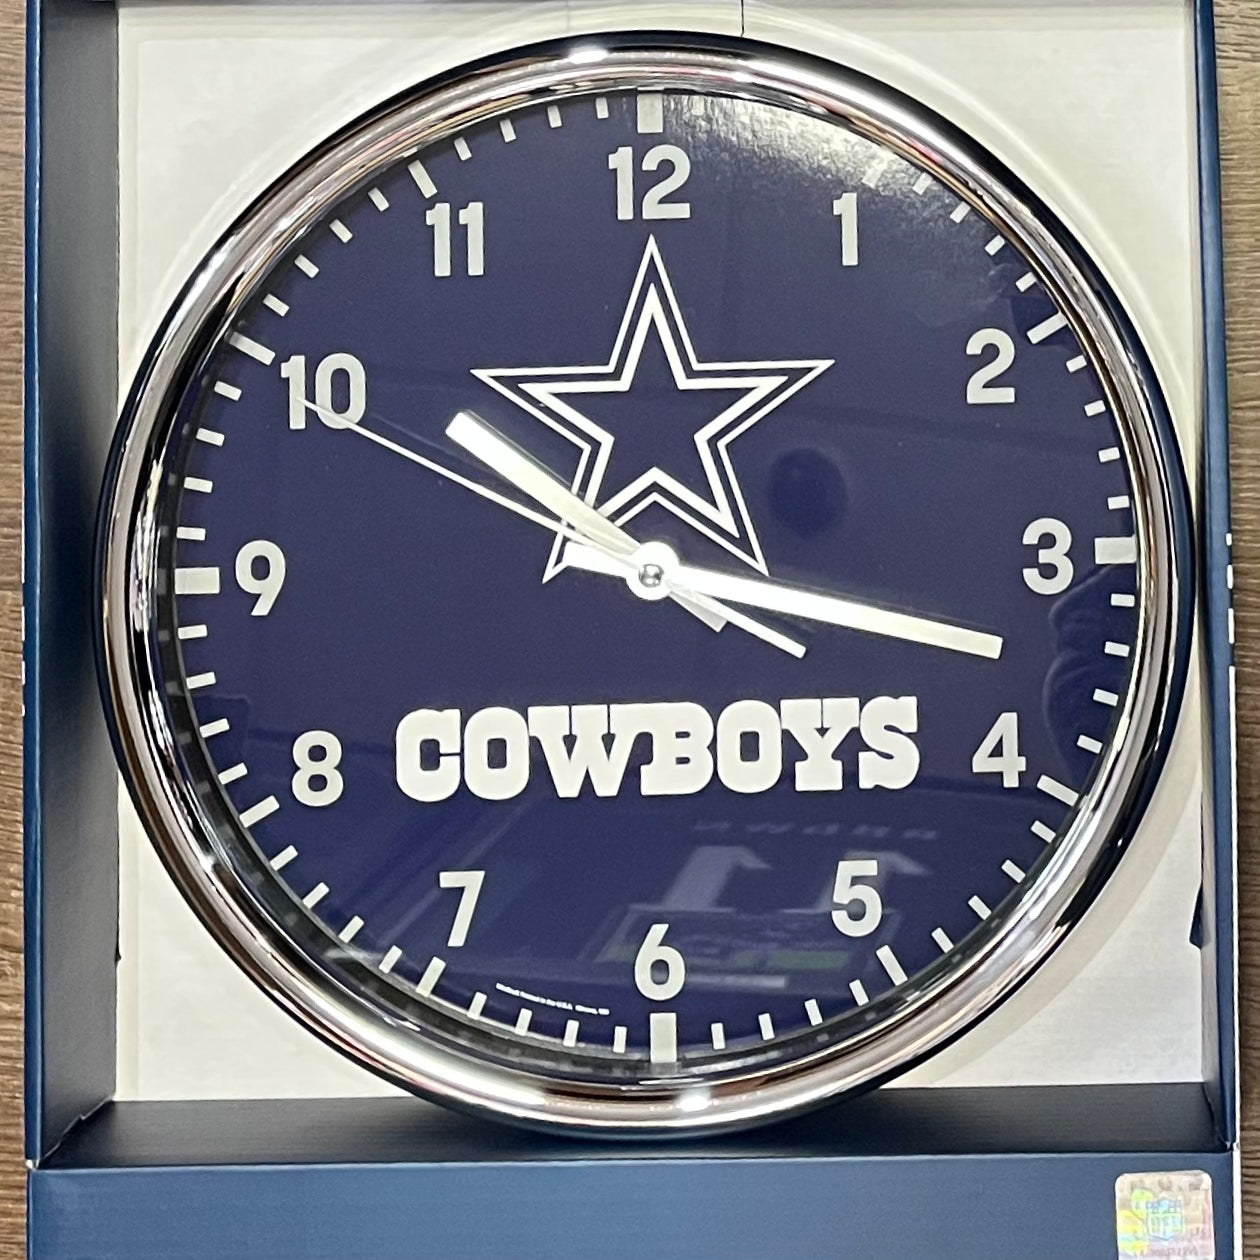 Dallas Cowboys Round Chrome Clock